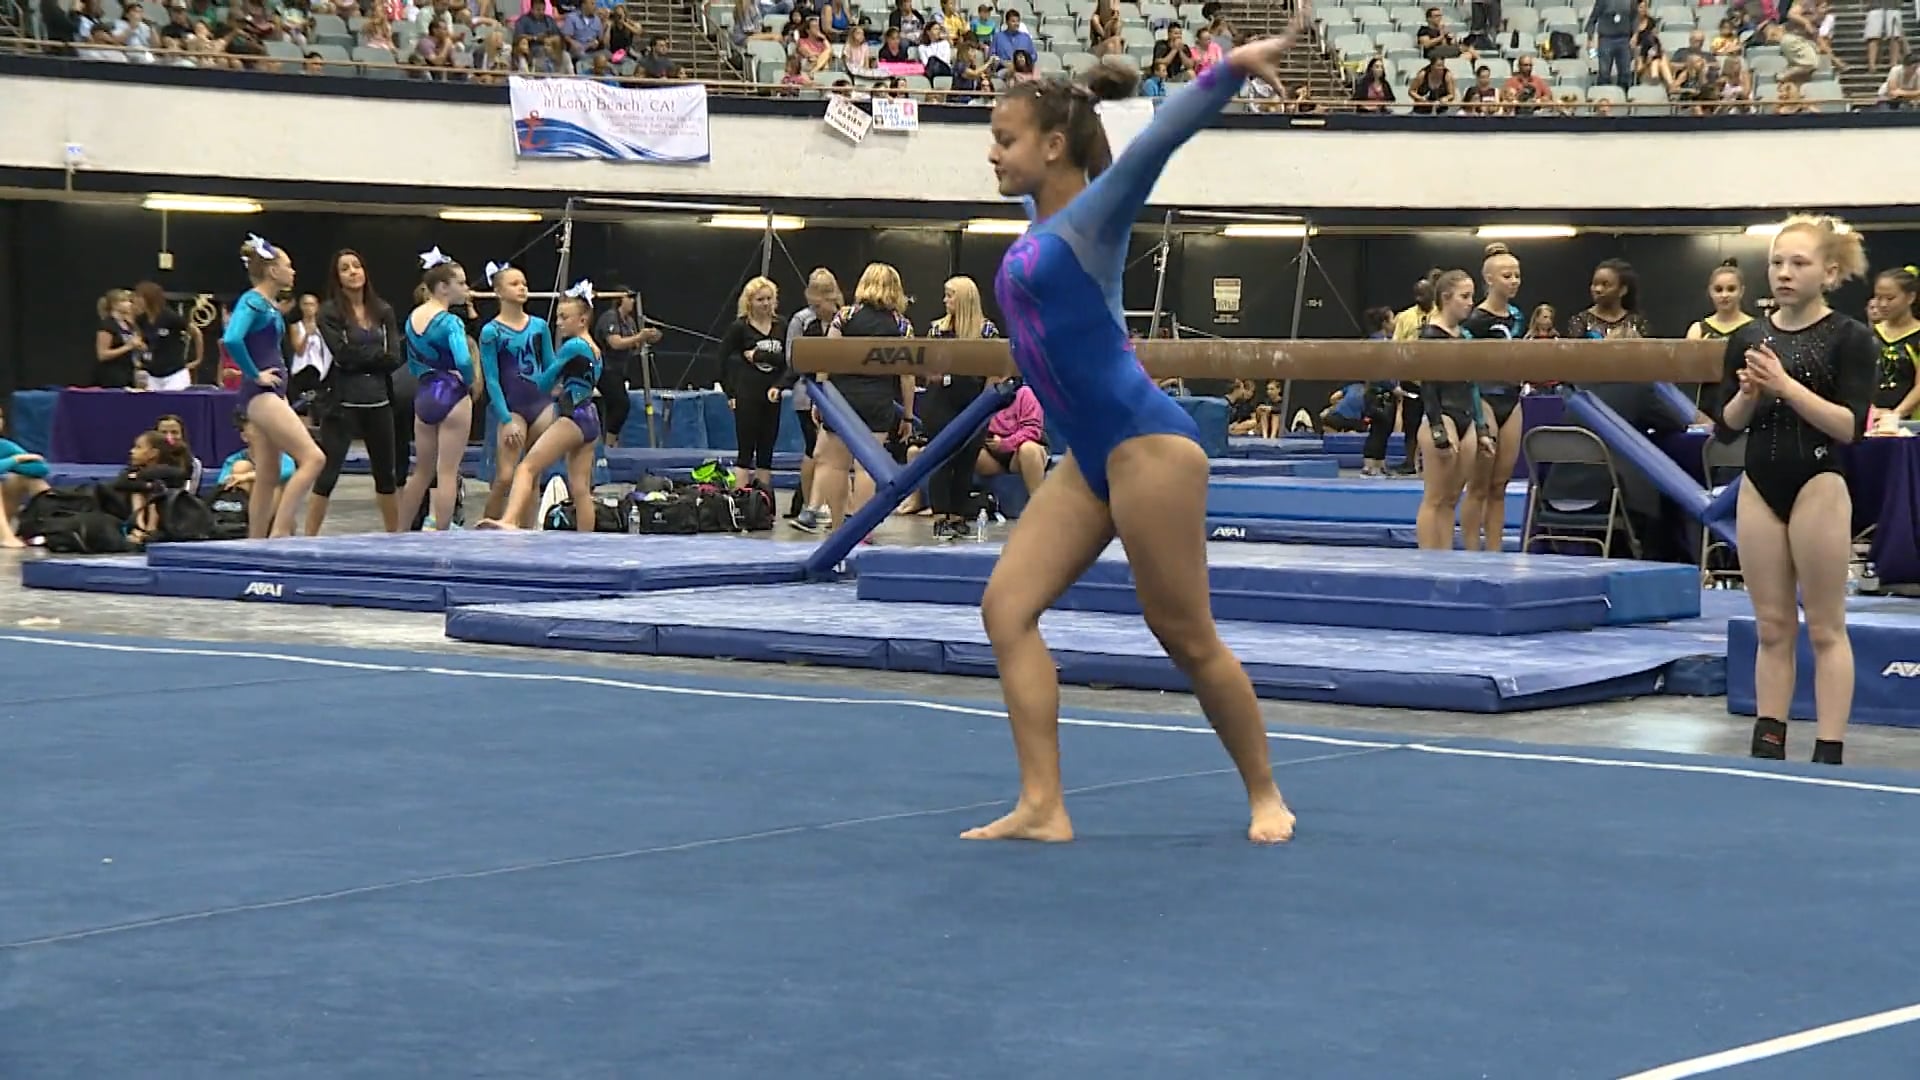 Lakewood YMCA Gymnastics Championships on Vimeo